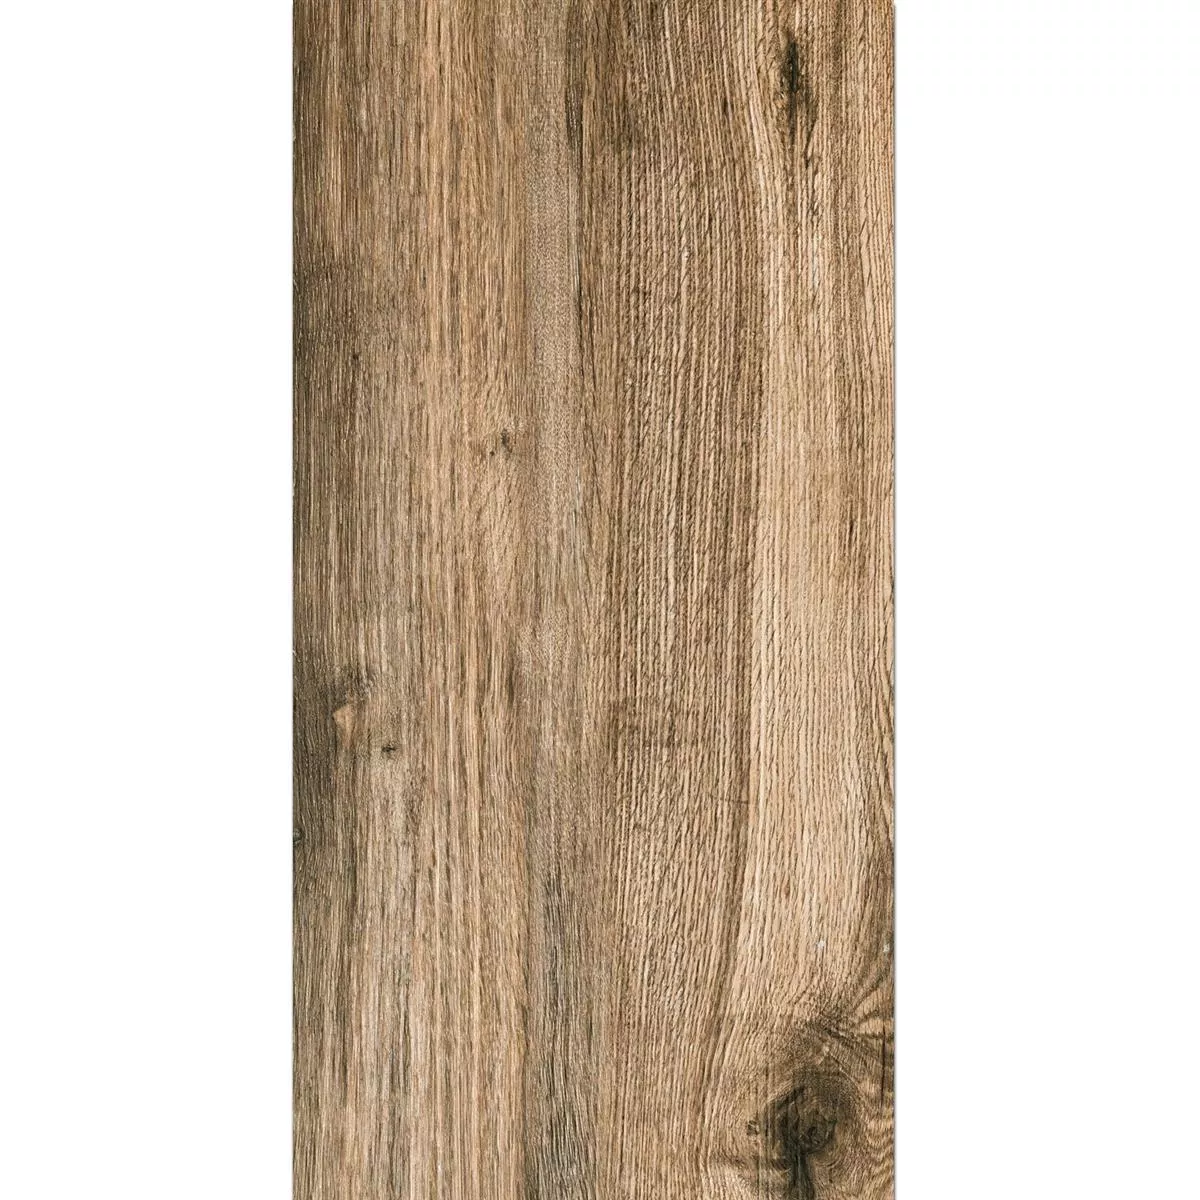 Sample Terrastegels Starwood Houtlook Oak 45x90cm